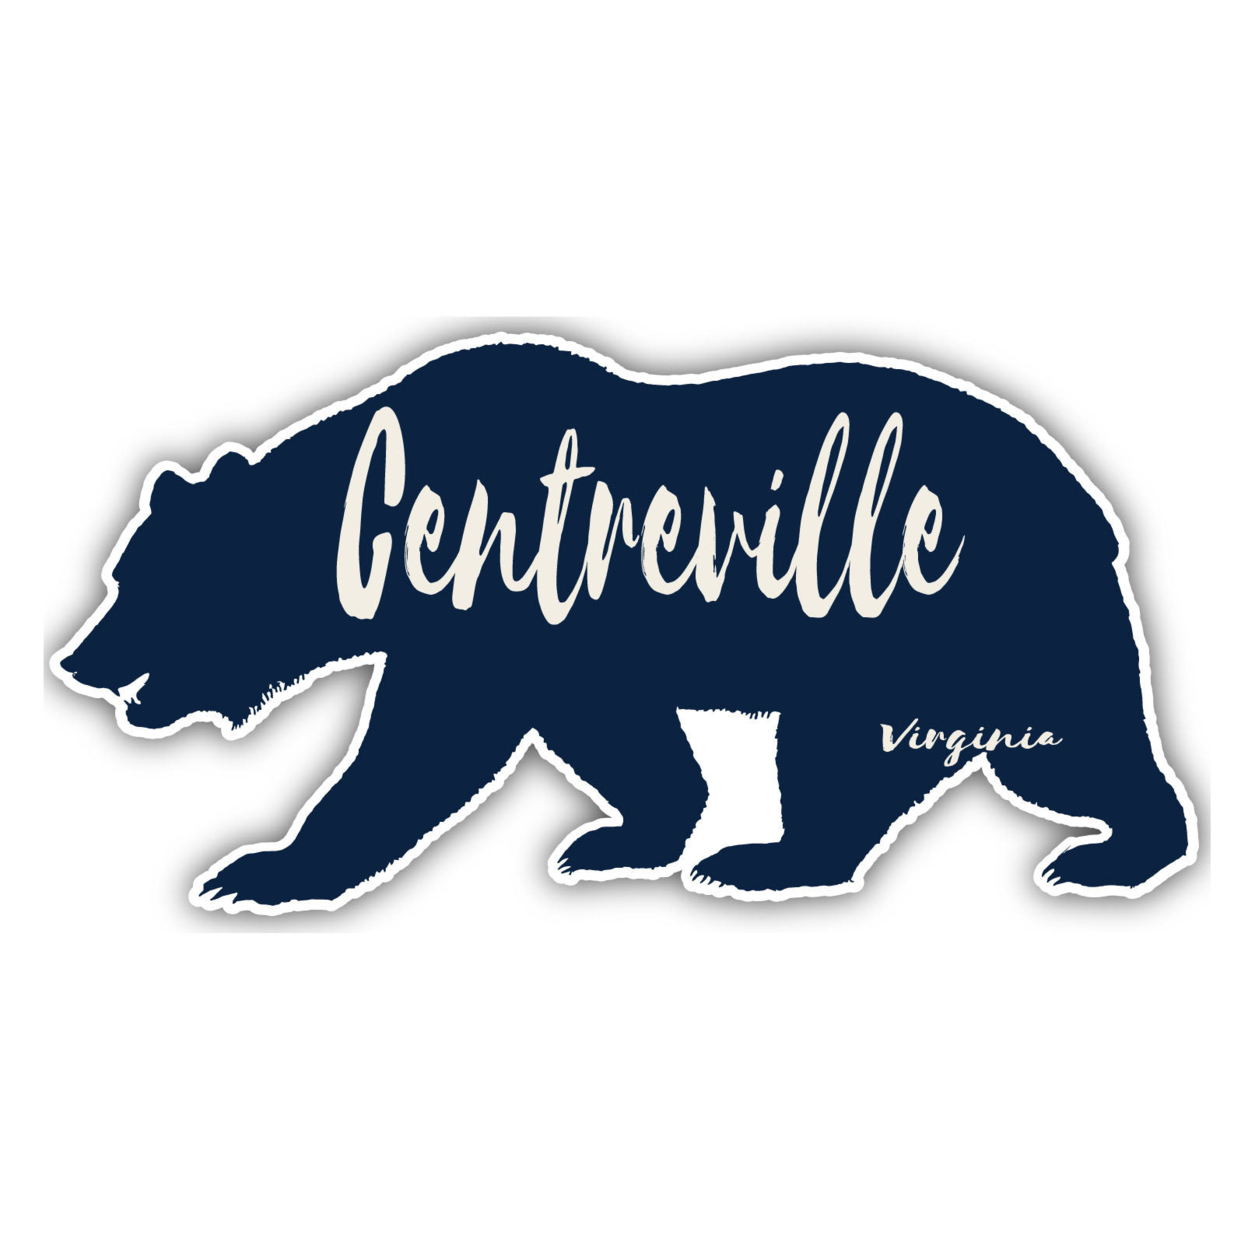 Centreville Virginia Souvenir Decorative Stickers (Choose Theme And Size) - Single Unit, 8-Inch, Bear